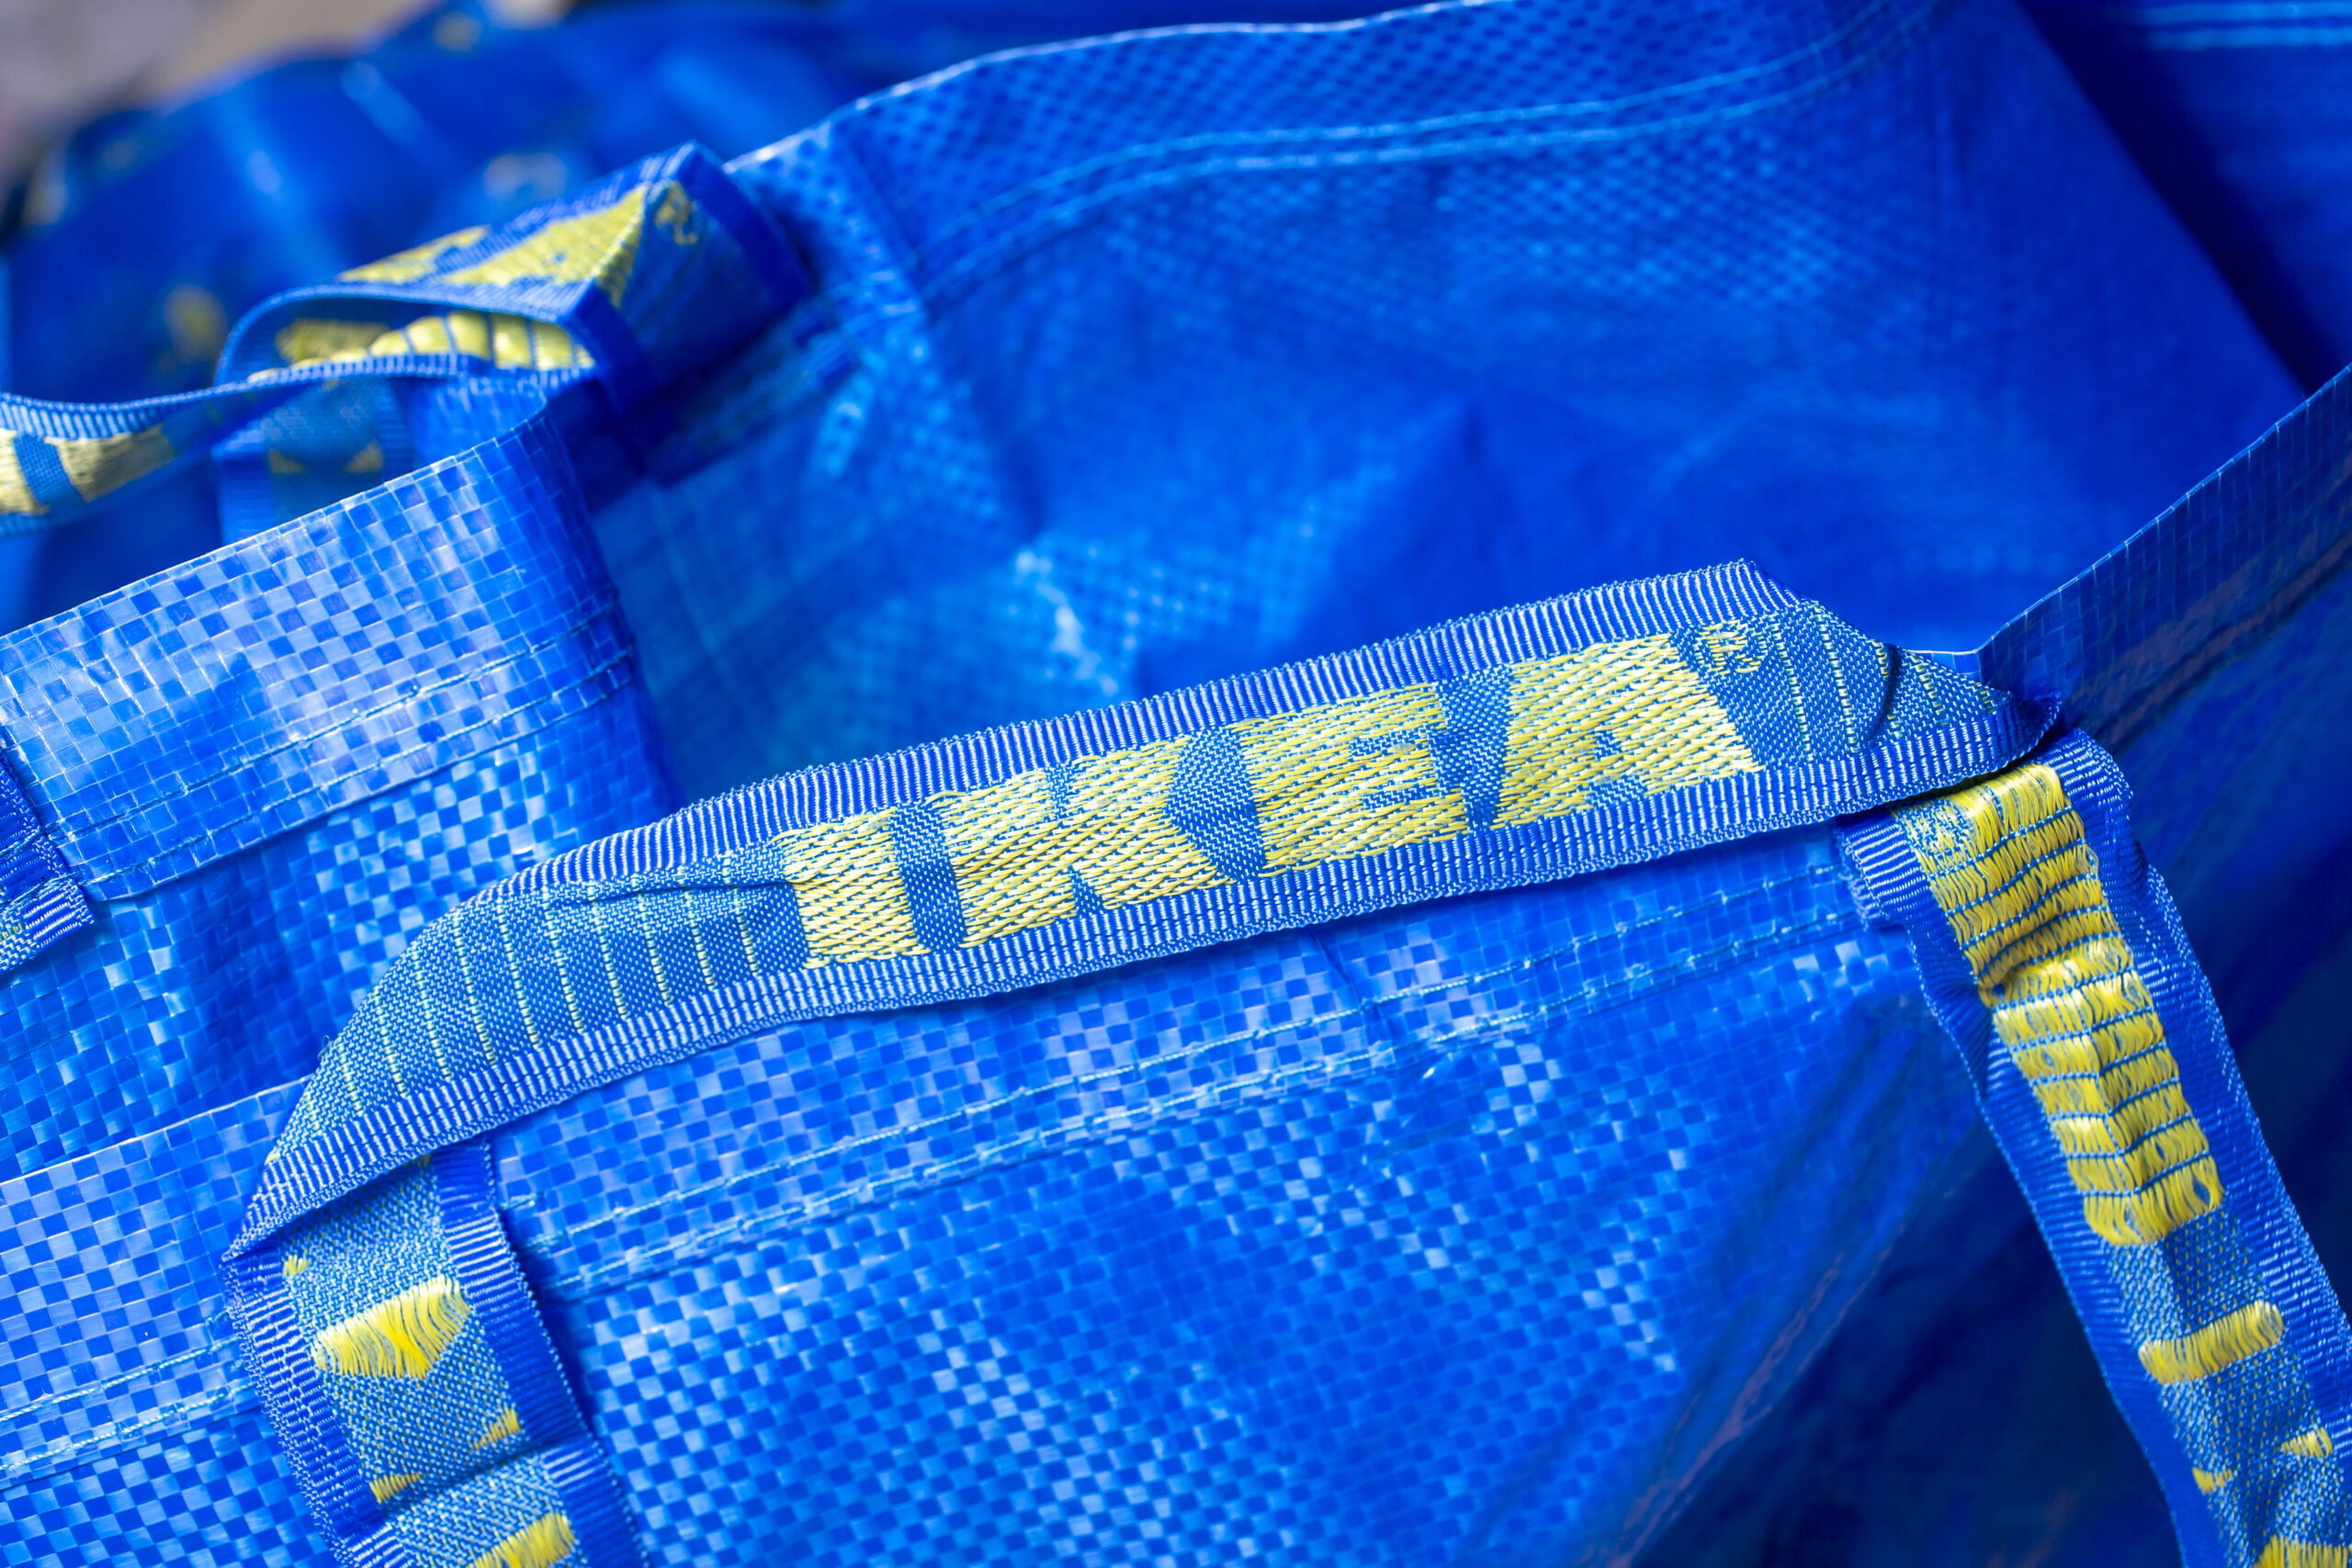 People DIY Blue Ikea Frakta Bag Into Everyday Items